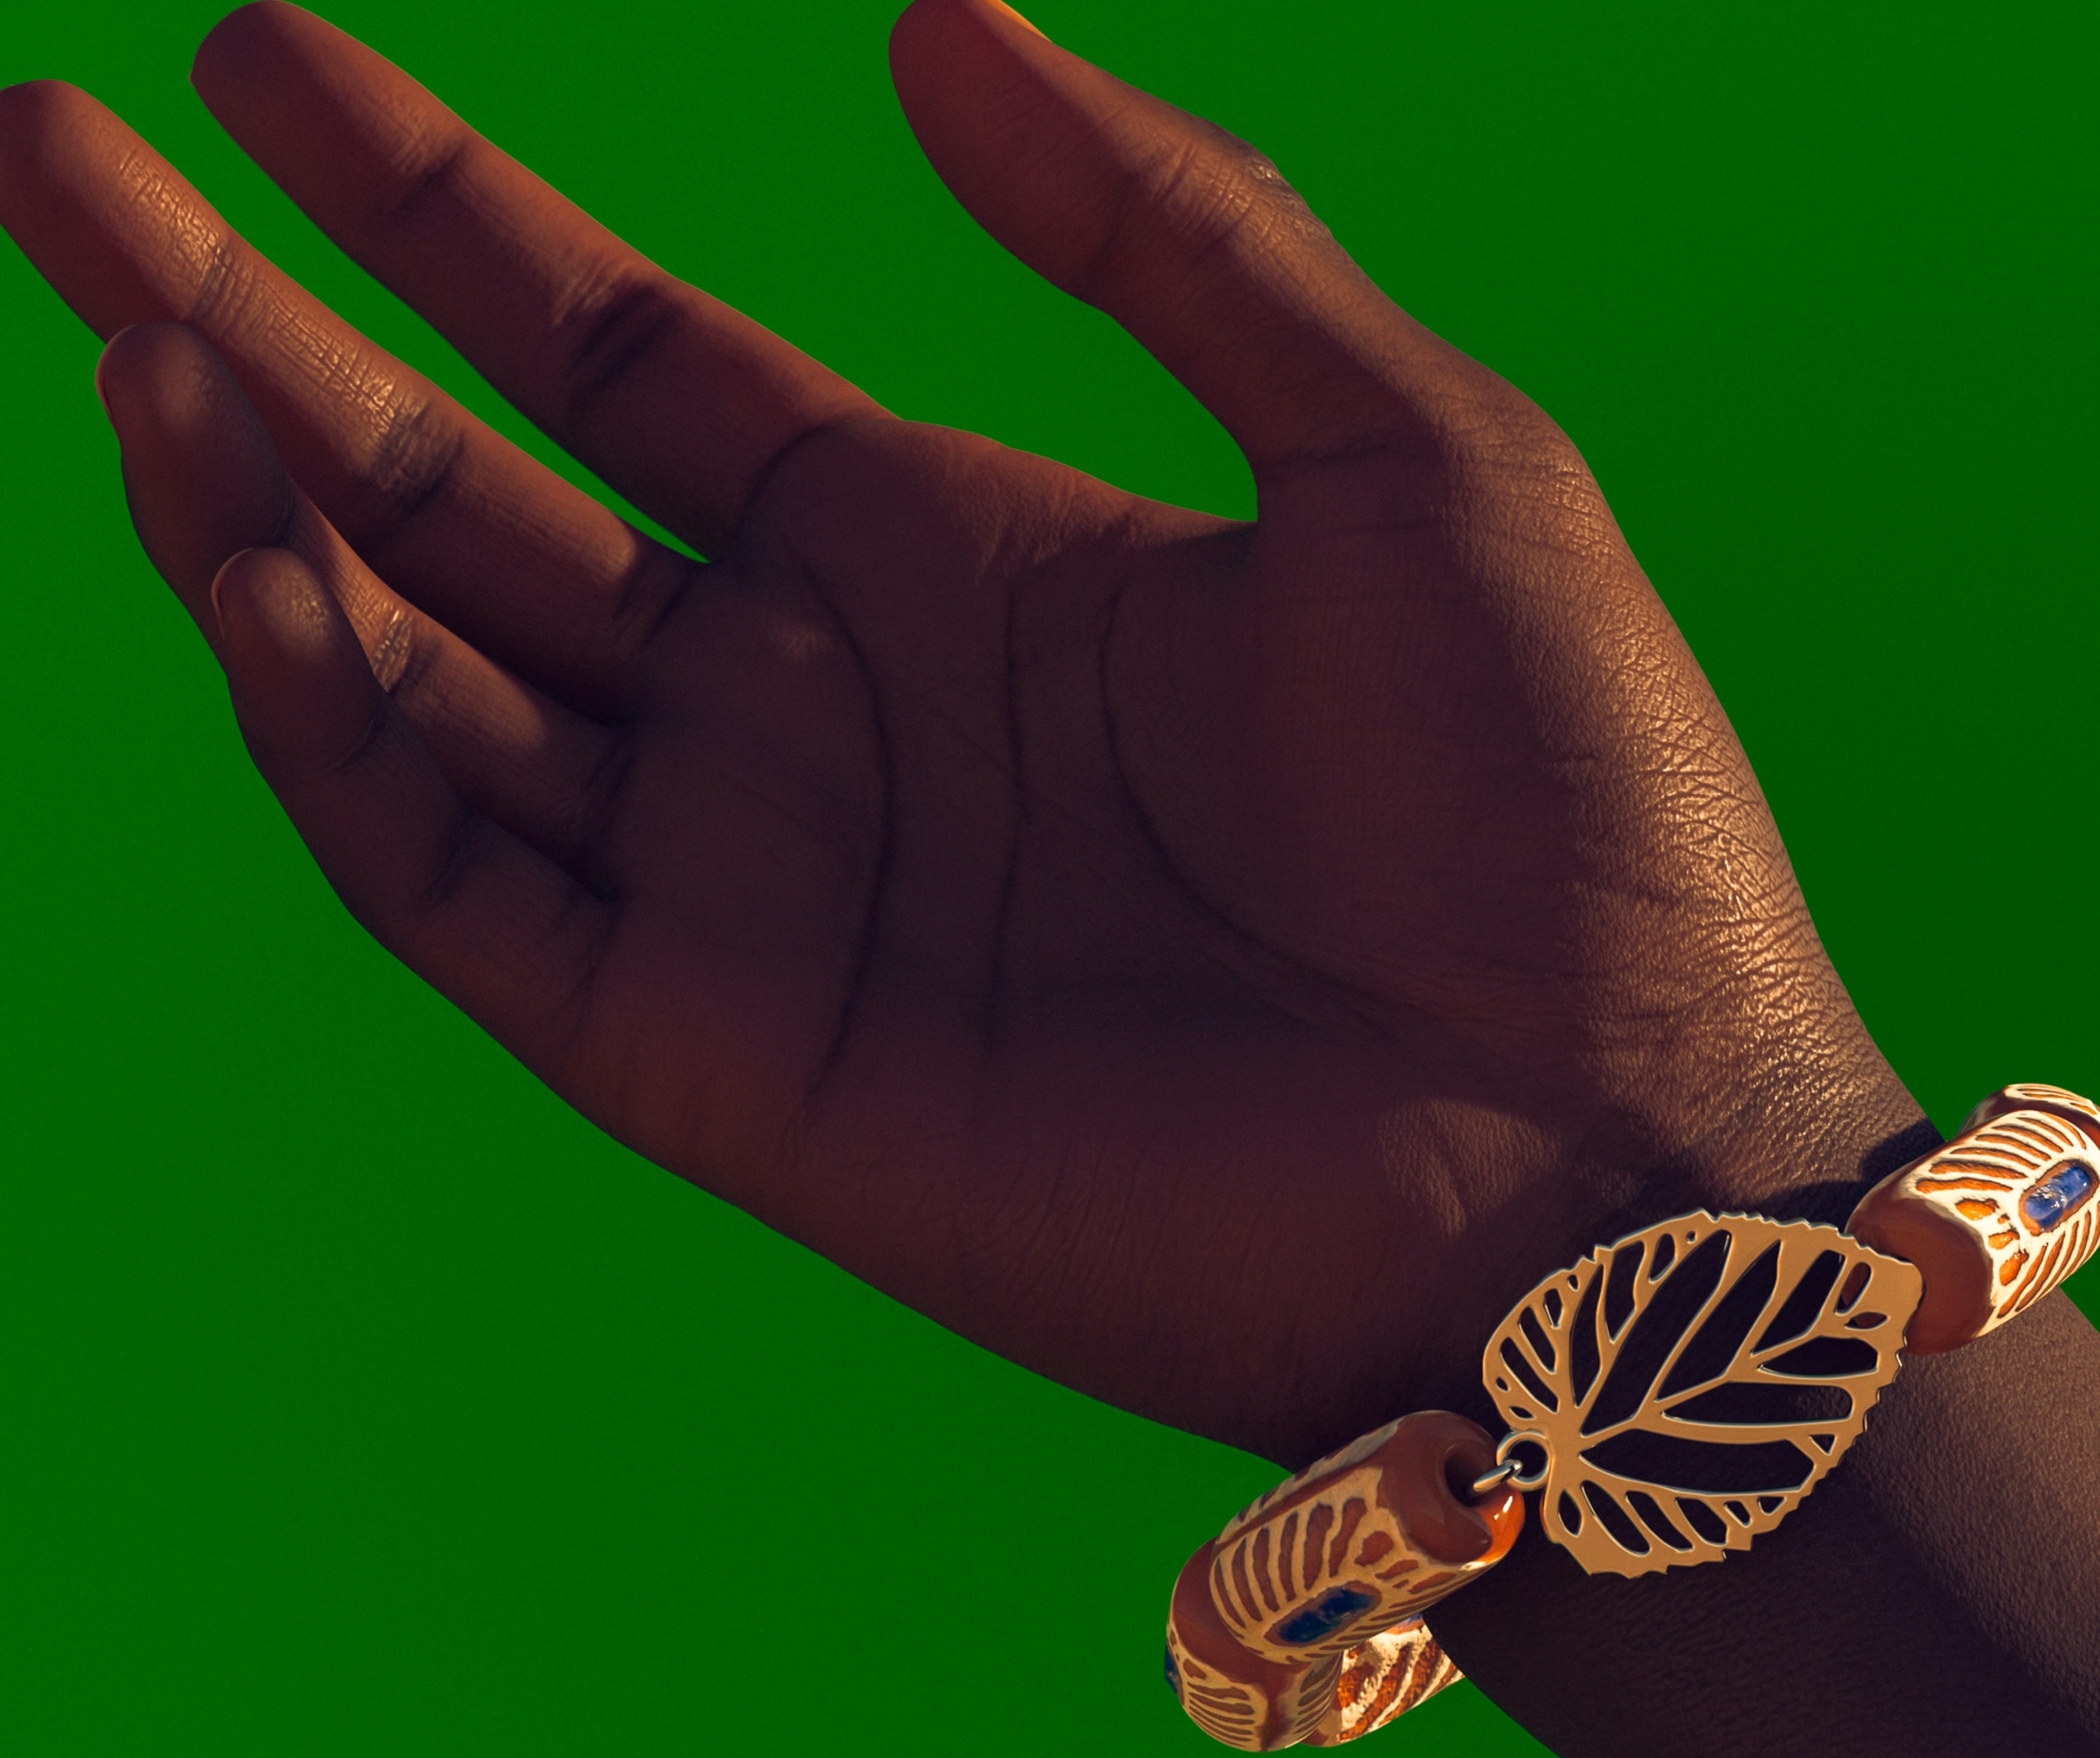 Ivorian style bracelet on a wrist on green background